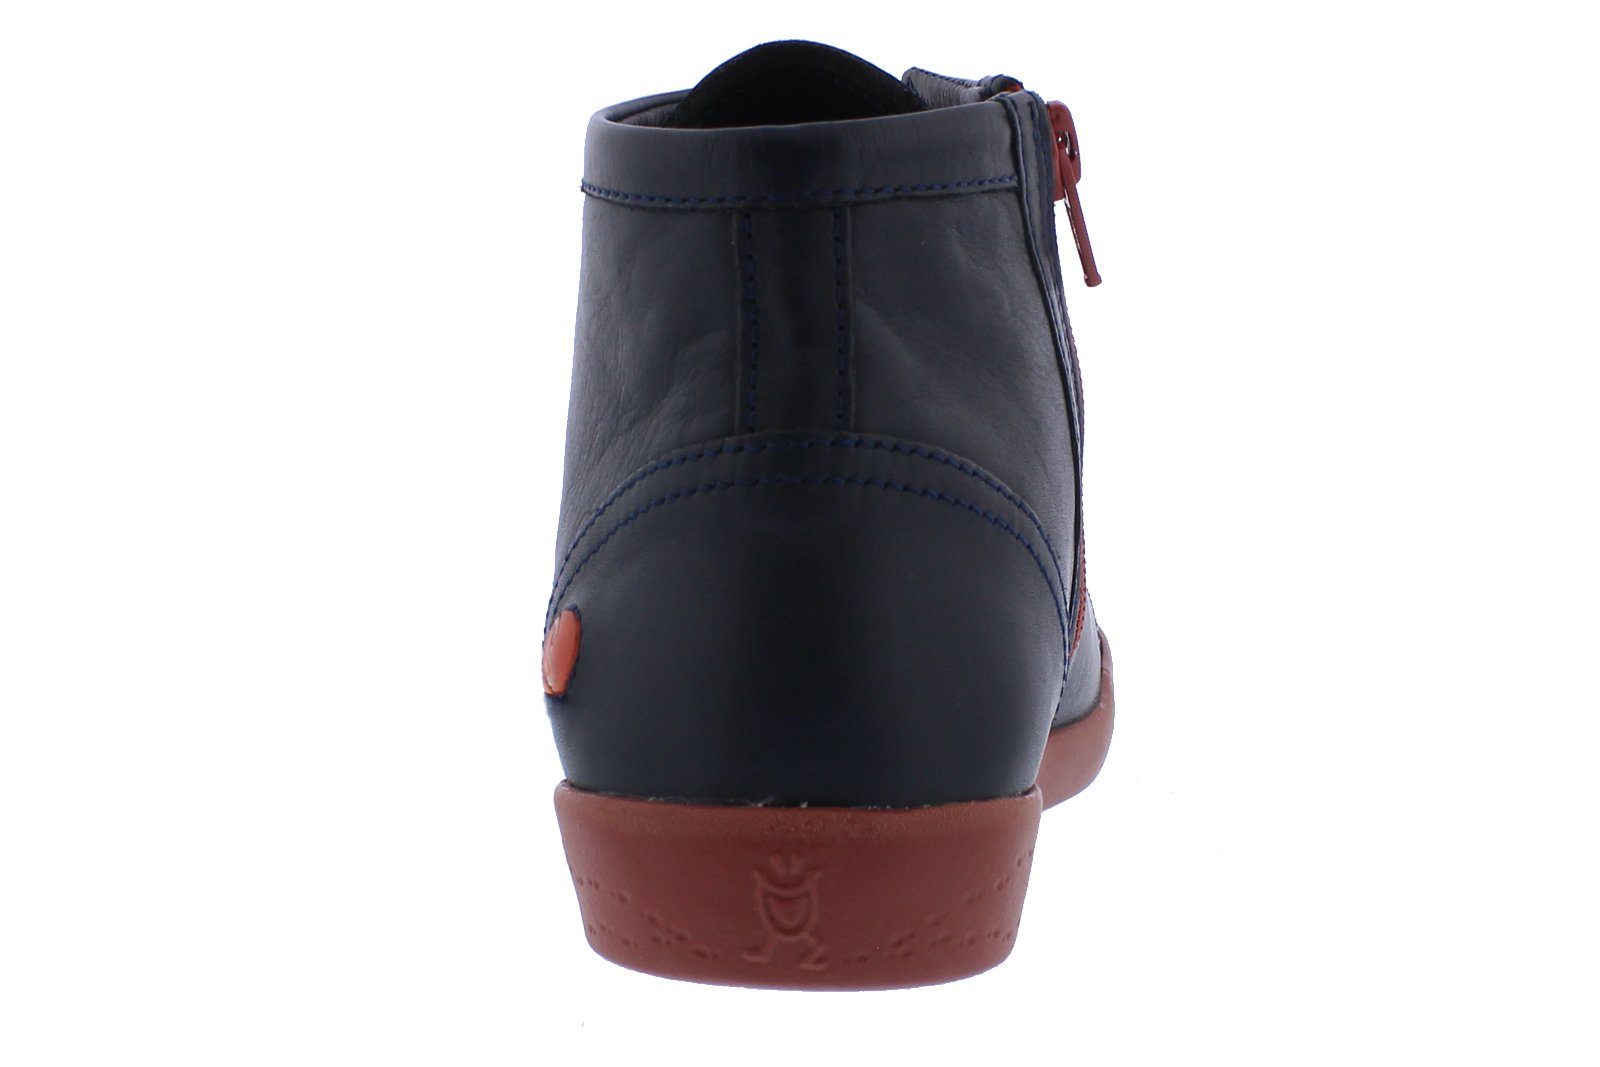 SOLE) Ankleboots Blau (025) softinos (NAVY/BRICK